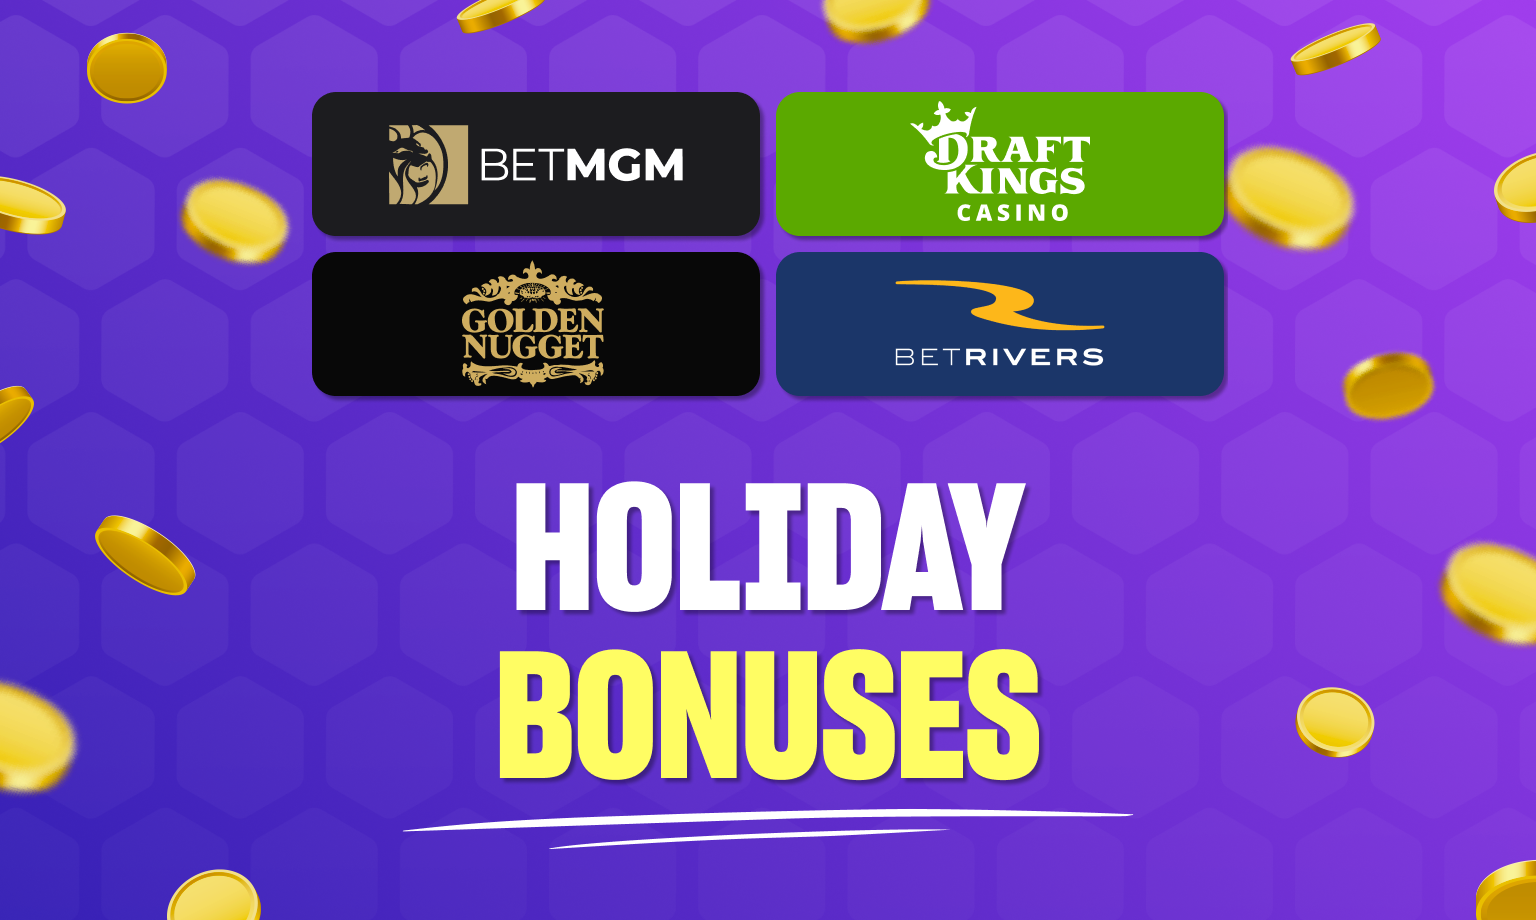 What are seasonal or holiday-themed casino bonuses?